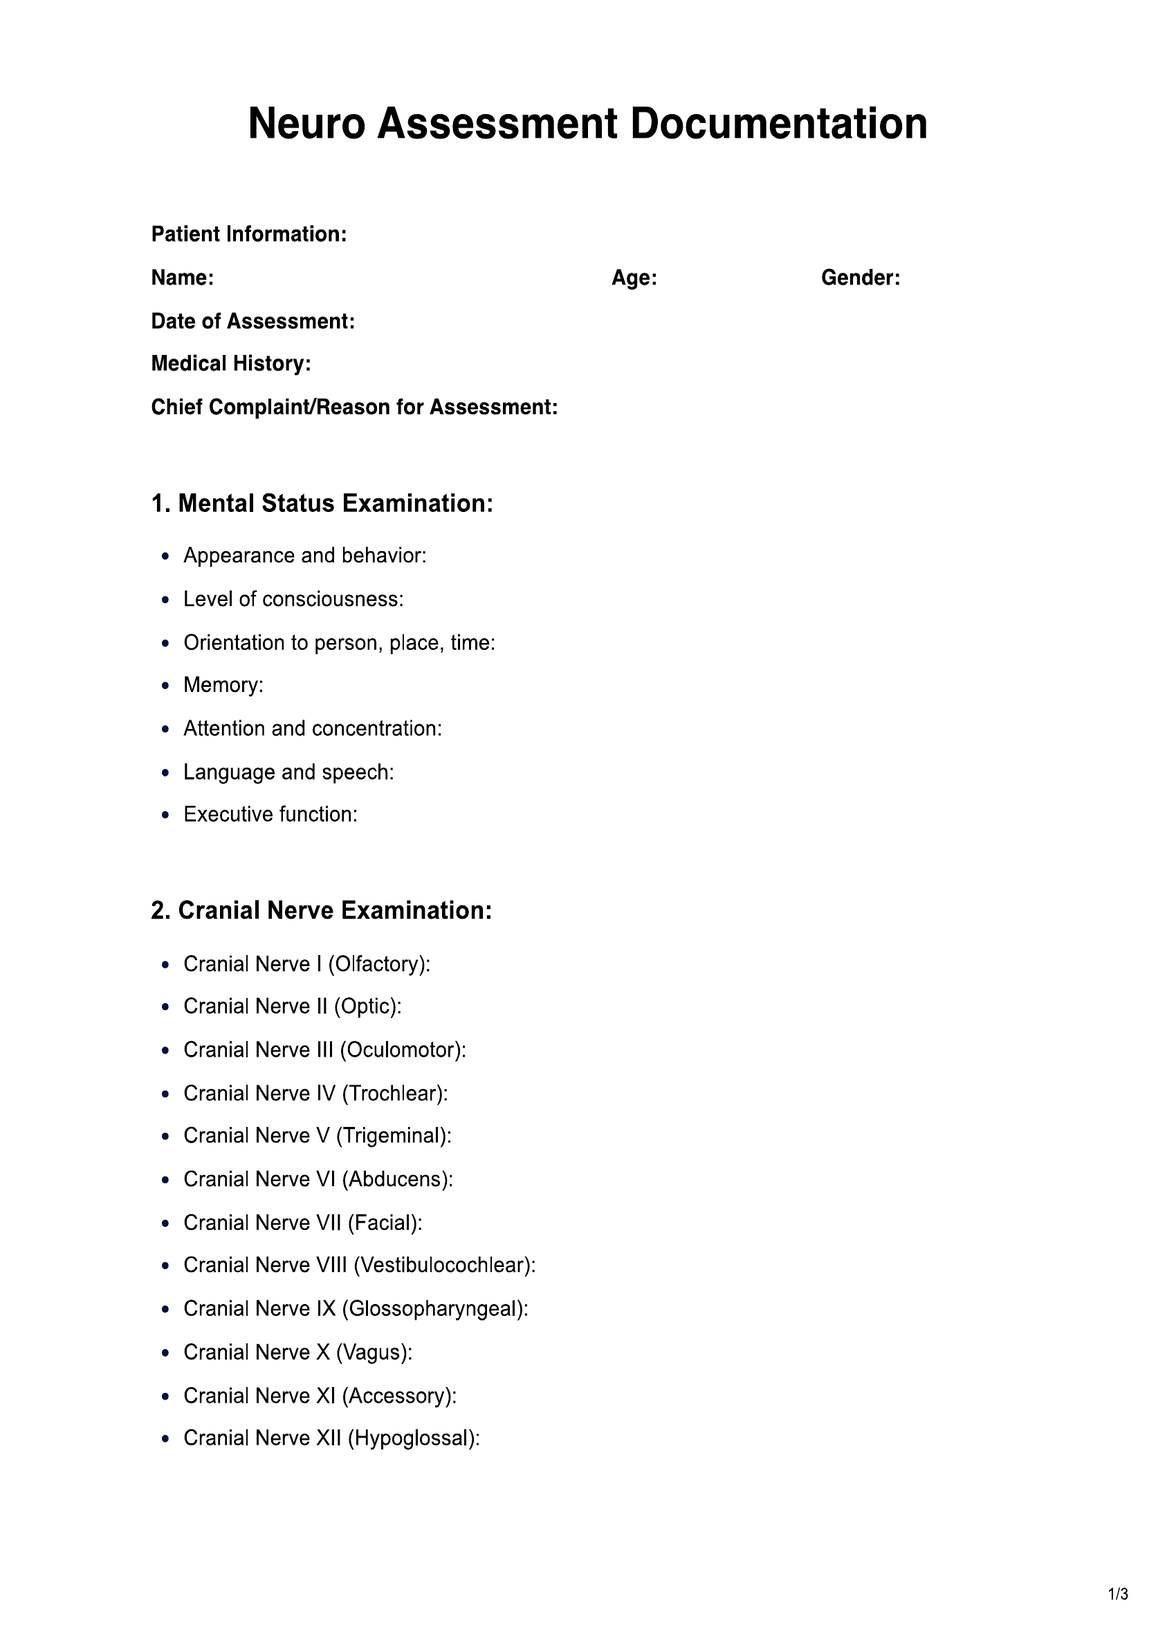 Neuro Assessment Documentation PDF Example